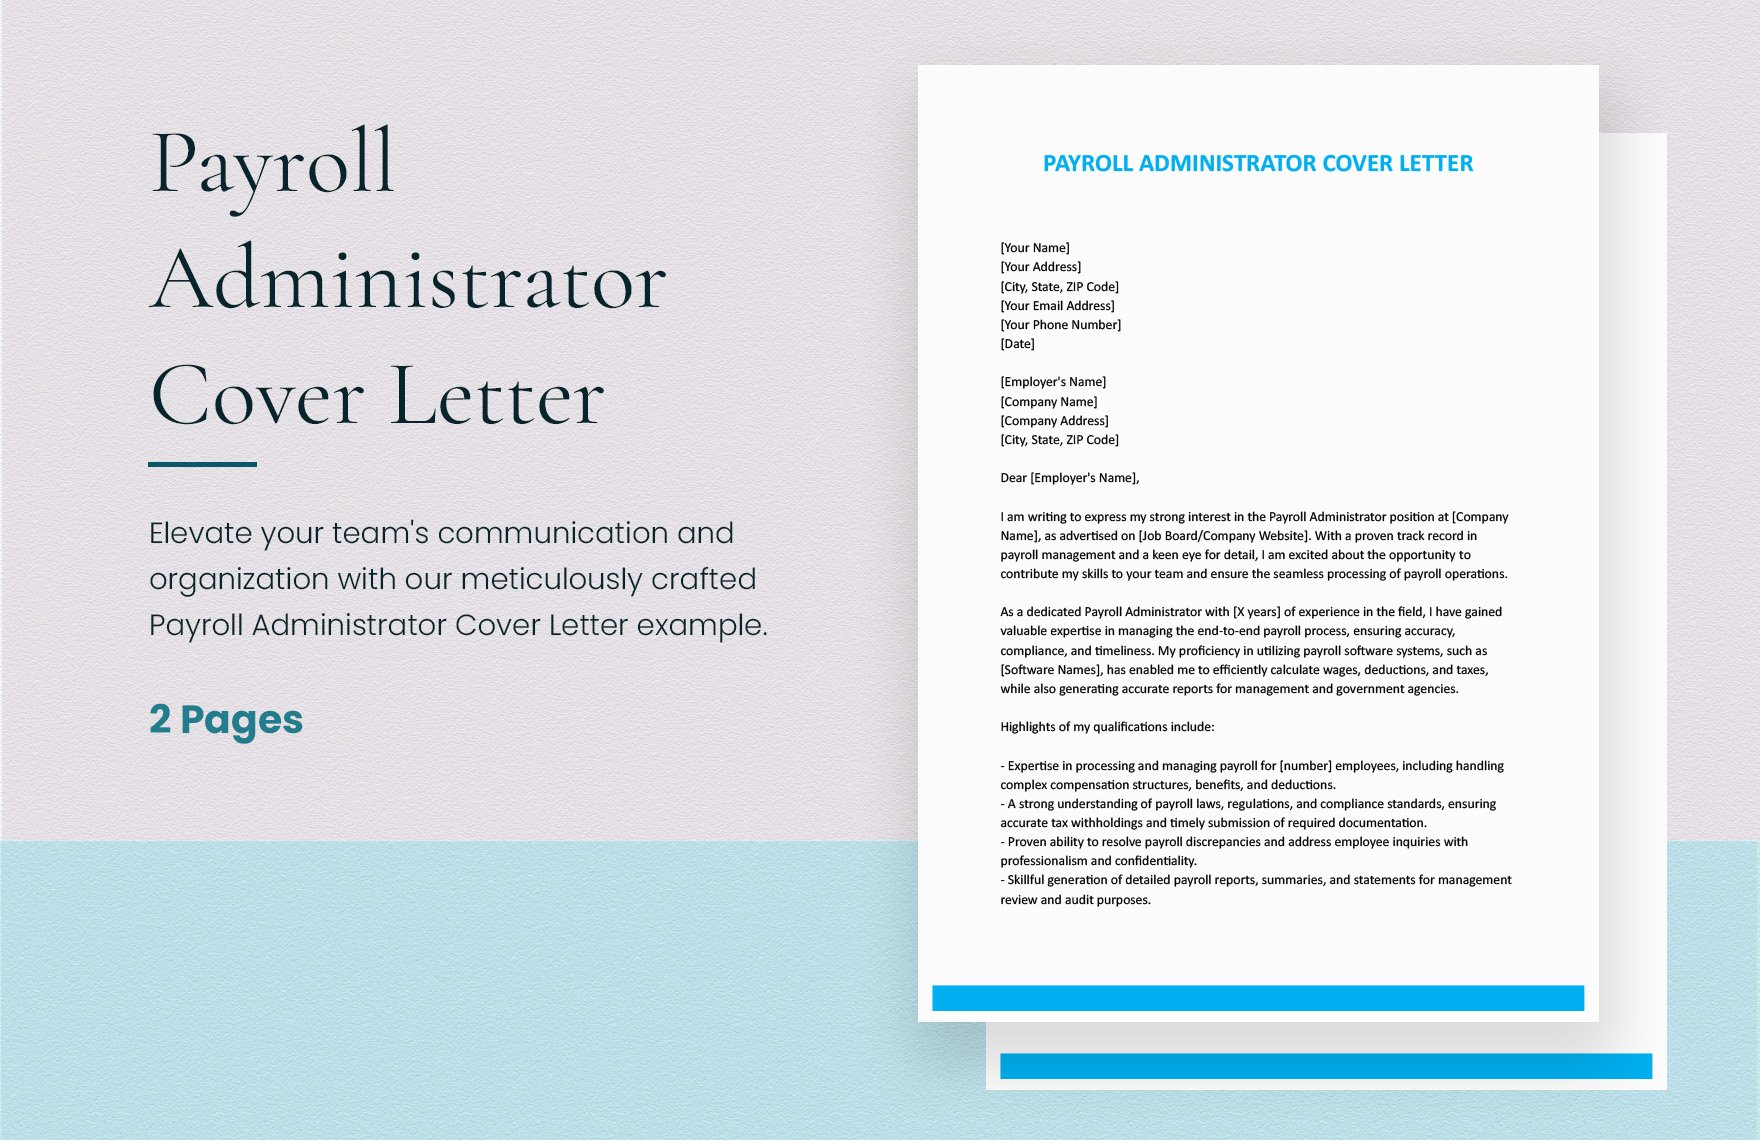 Payroll Administrator Cover Letter